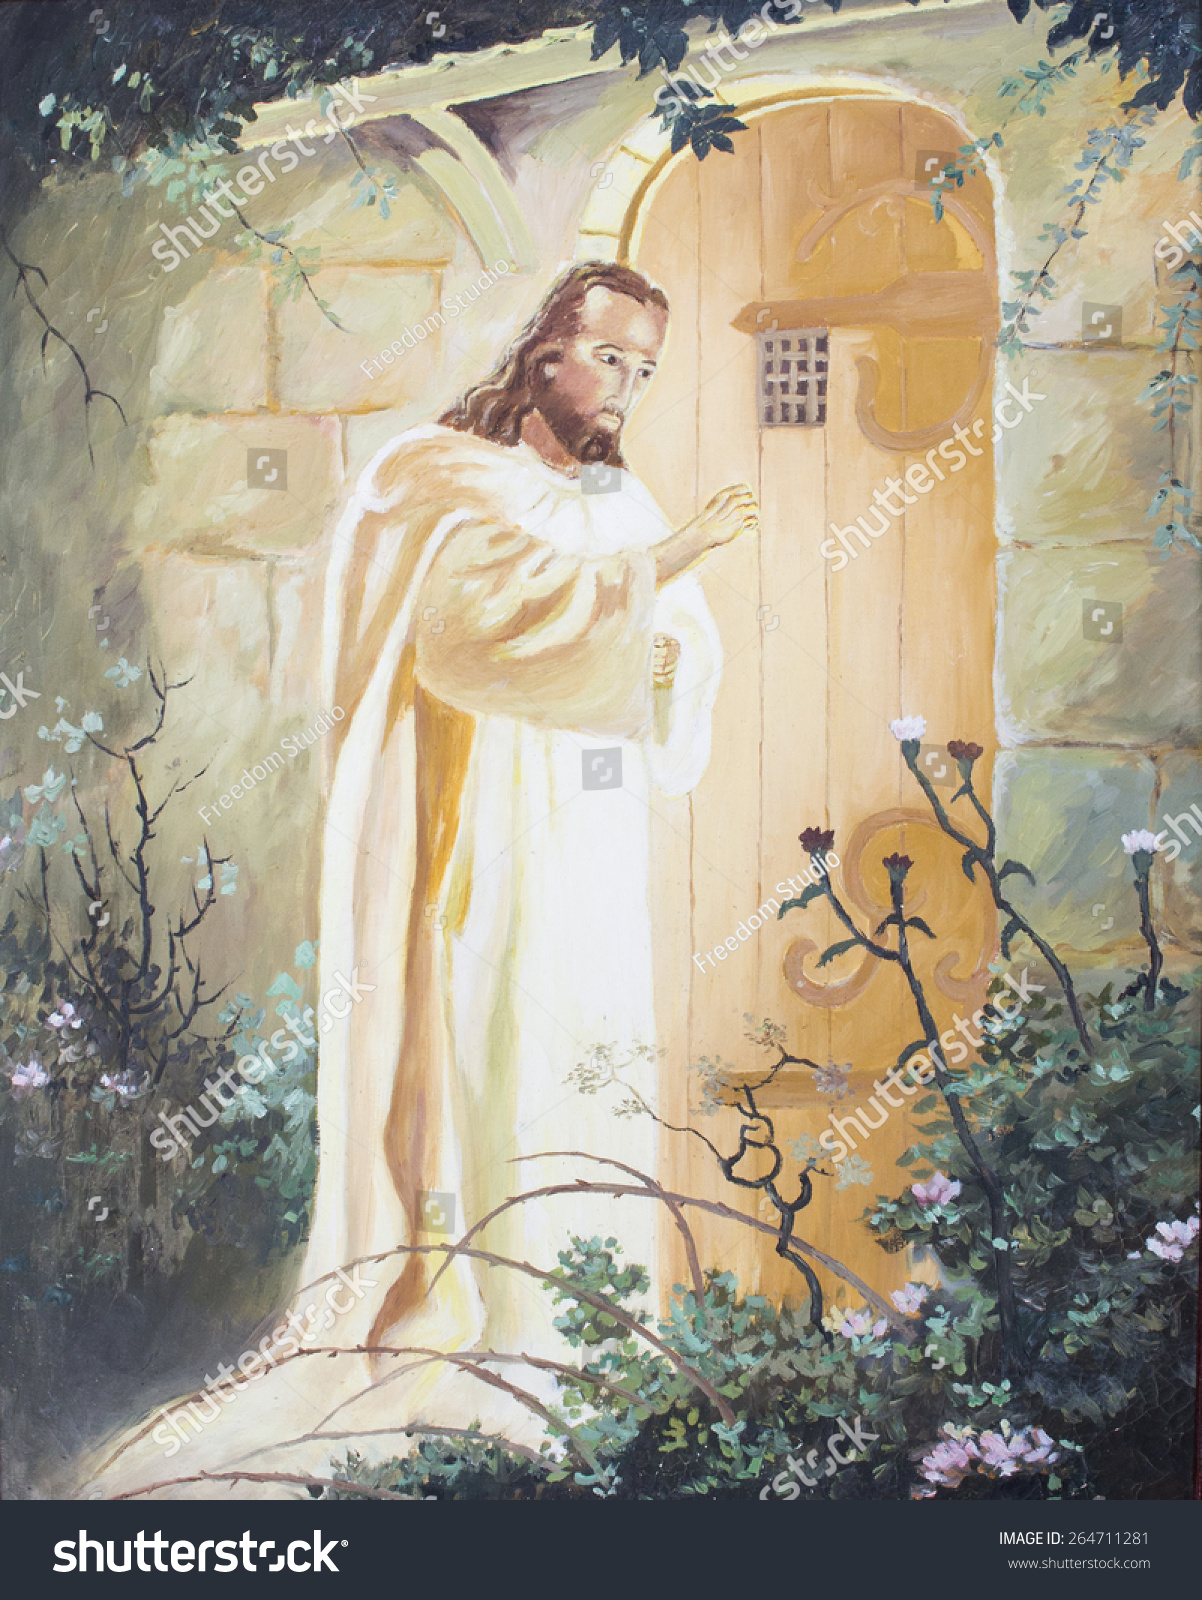 Stock Photo Jesus Knocking On The Door Original Oil Painting On Canvas 264711281 